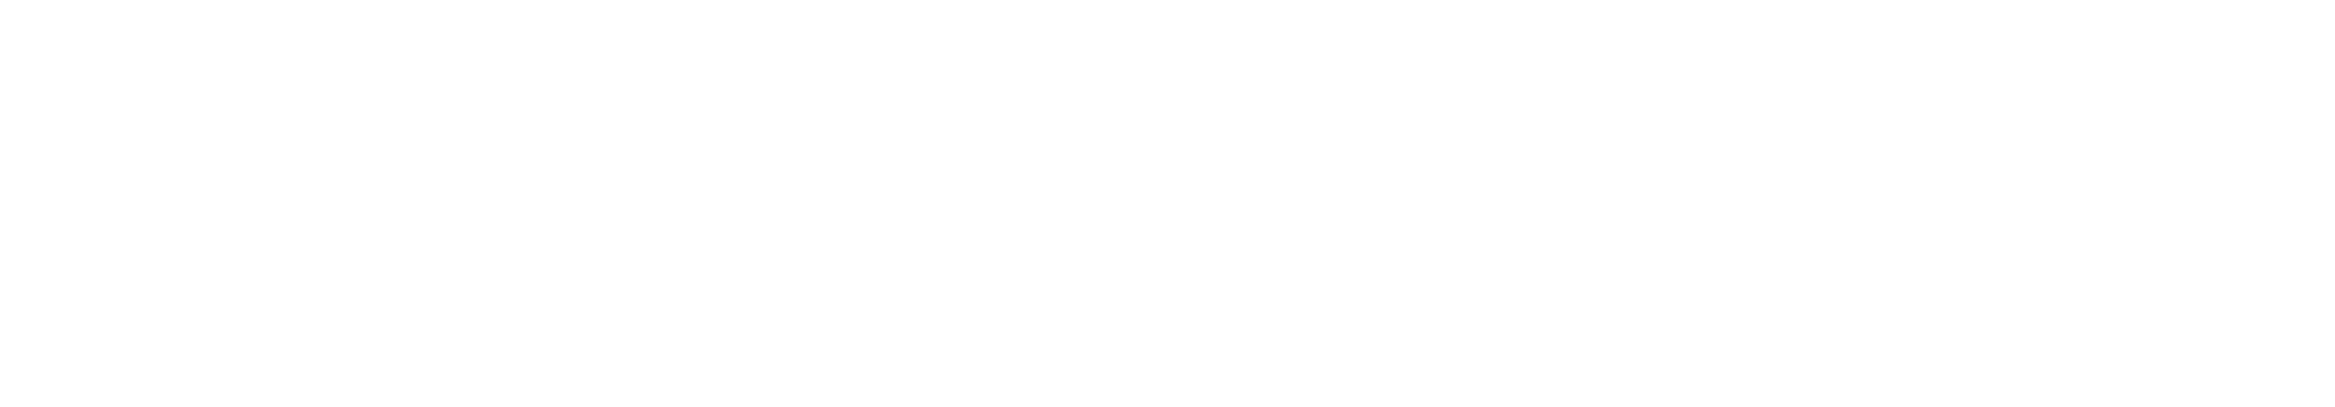 SPH-Horizontal-Logo-White